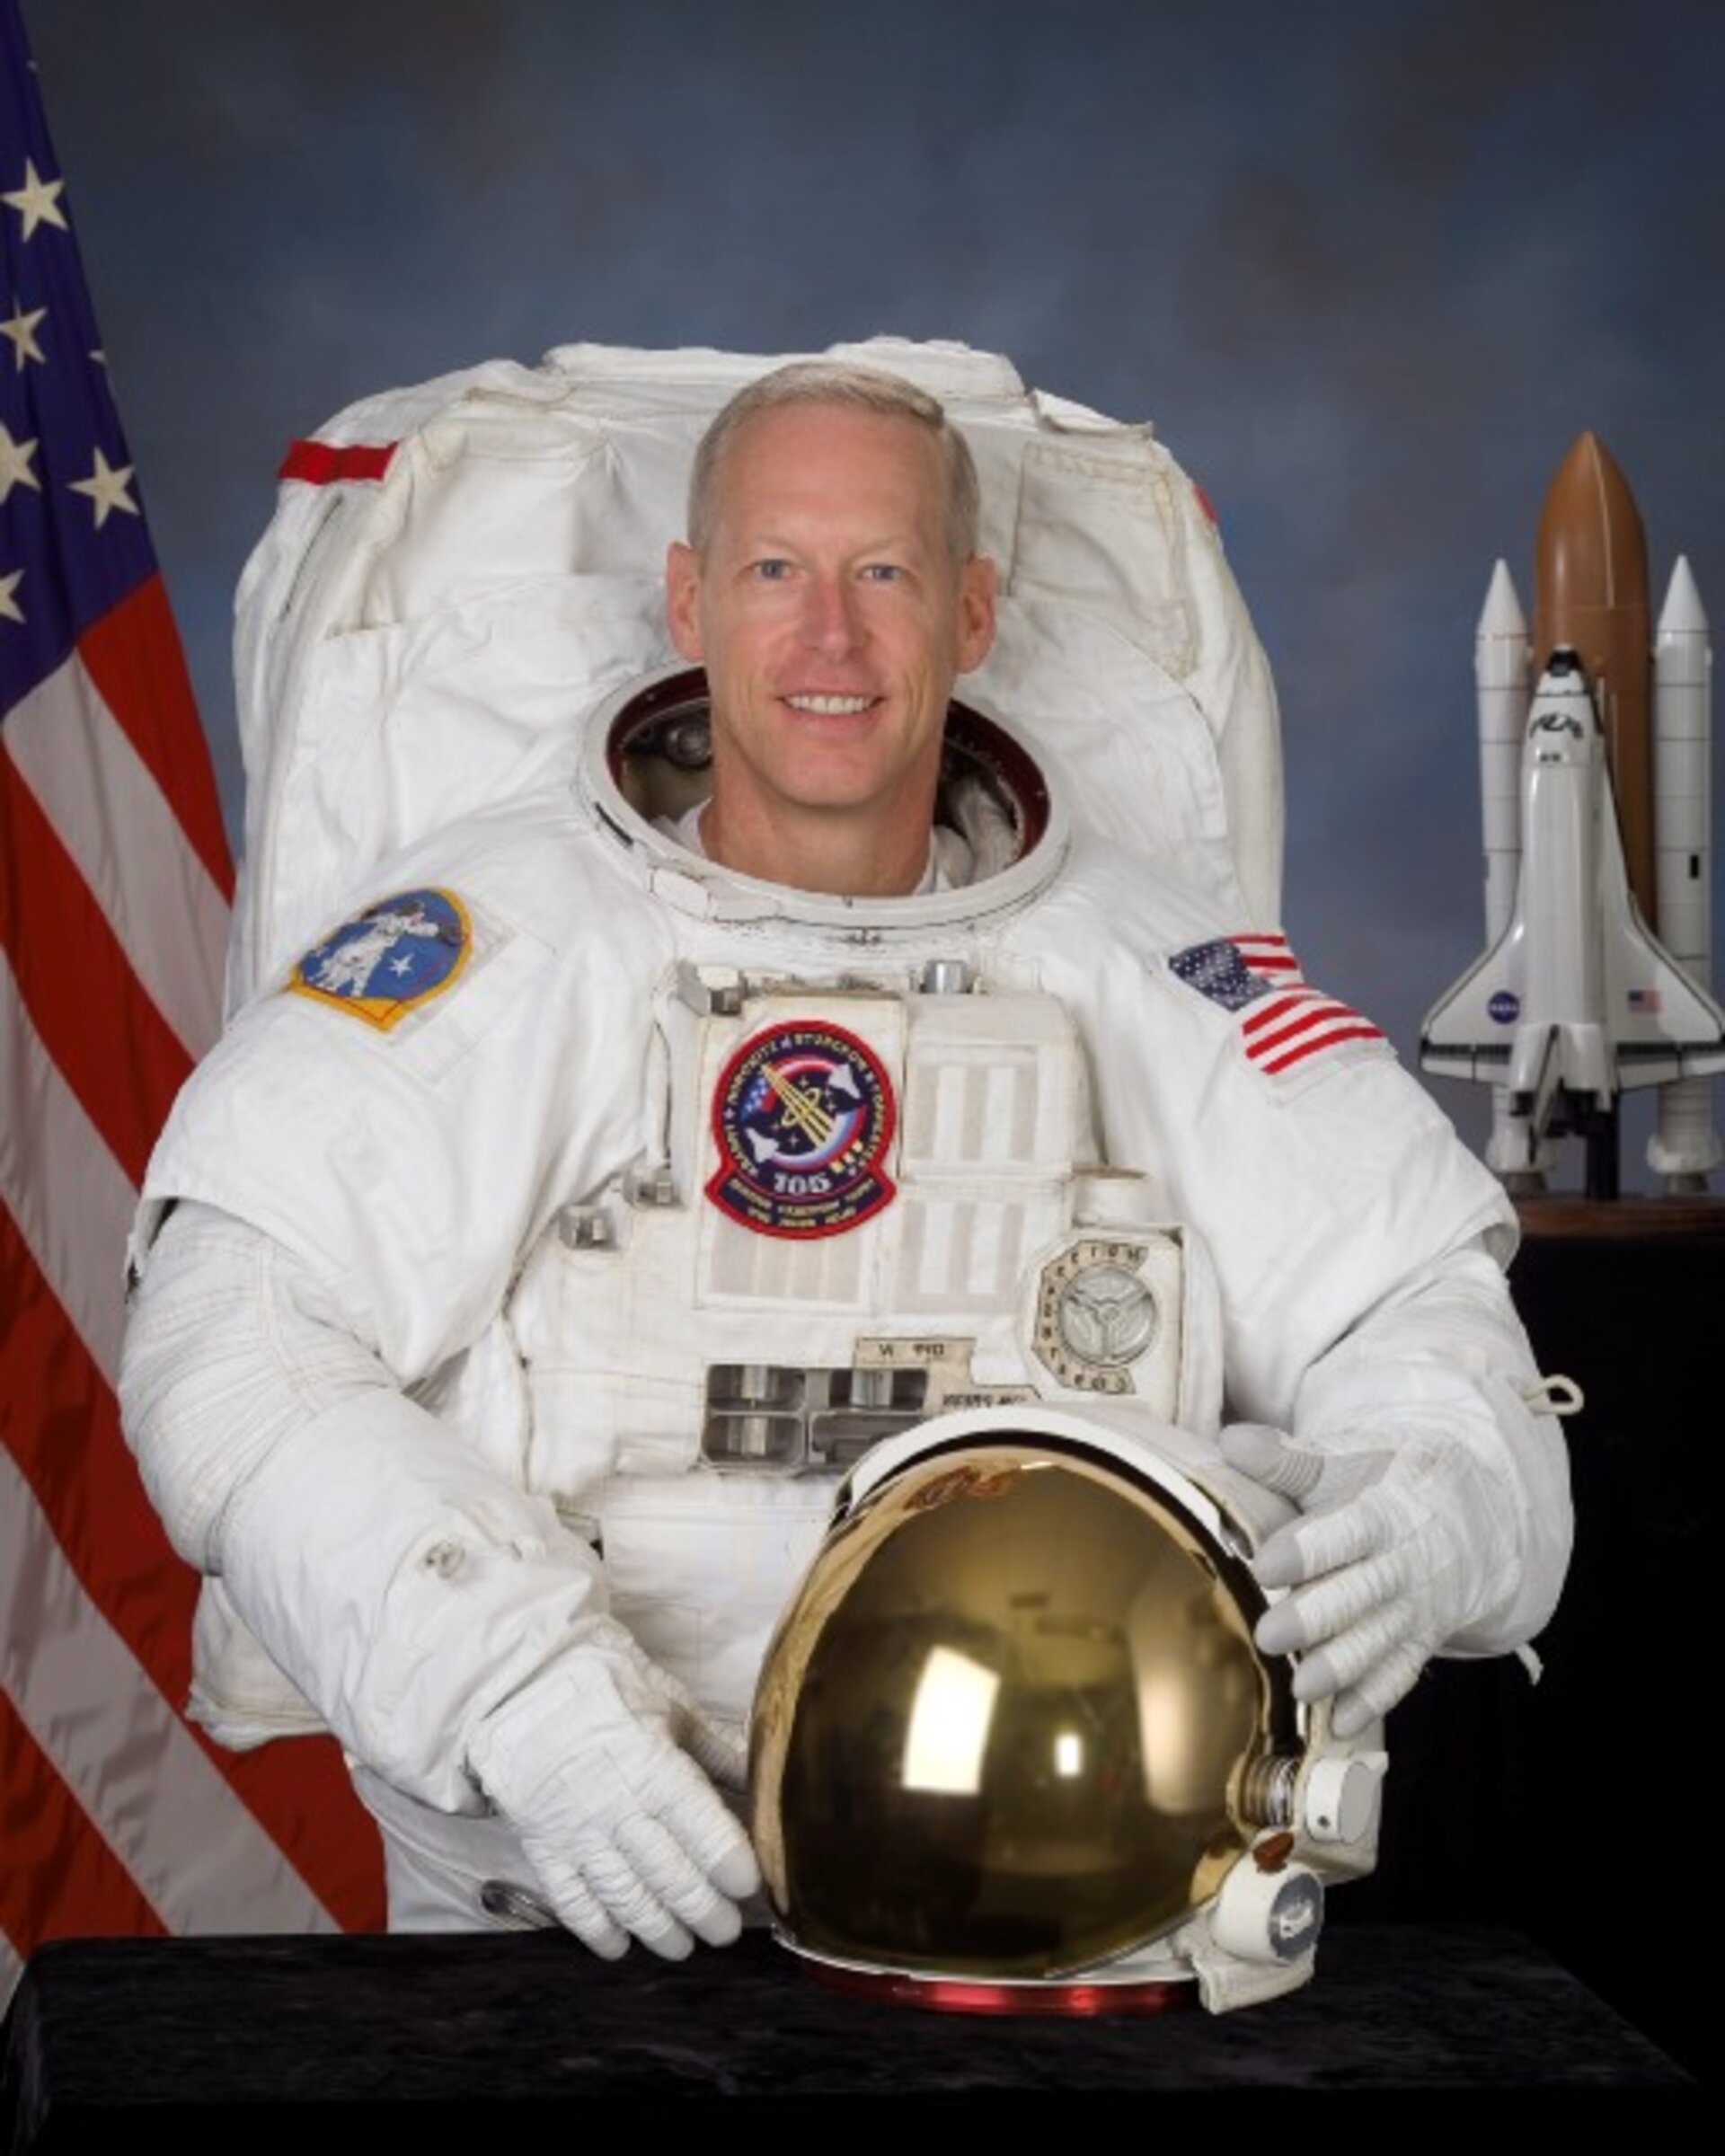 NASA astronaut Patrick G. Forrester